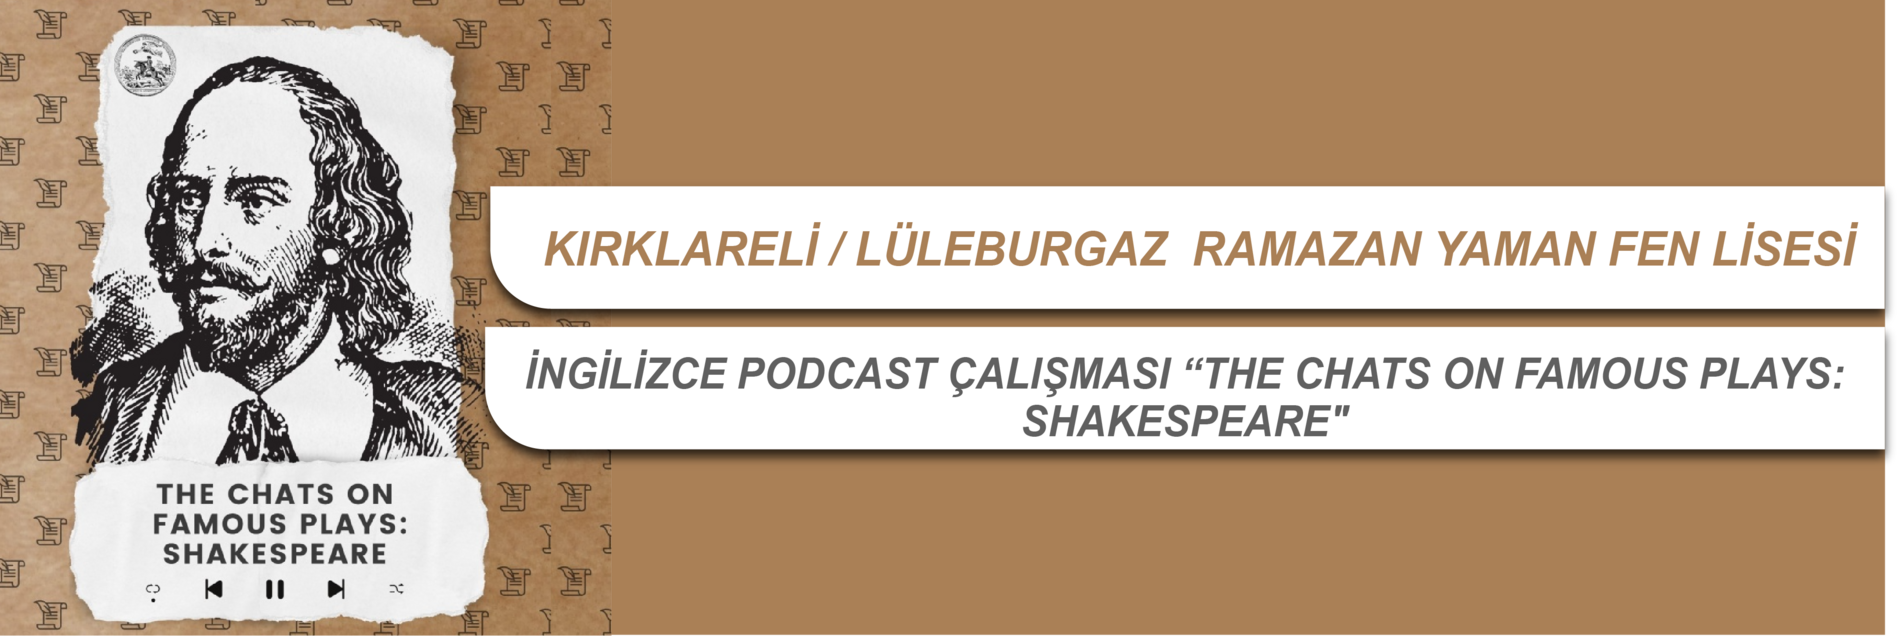 İngilizce Podcast Çalışması “The Chats on Famous Plays: Shakespeare"